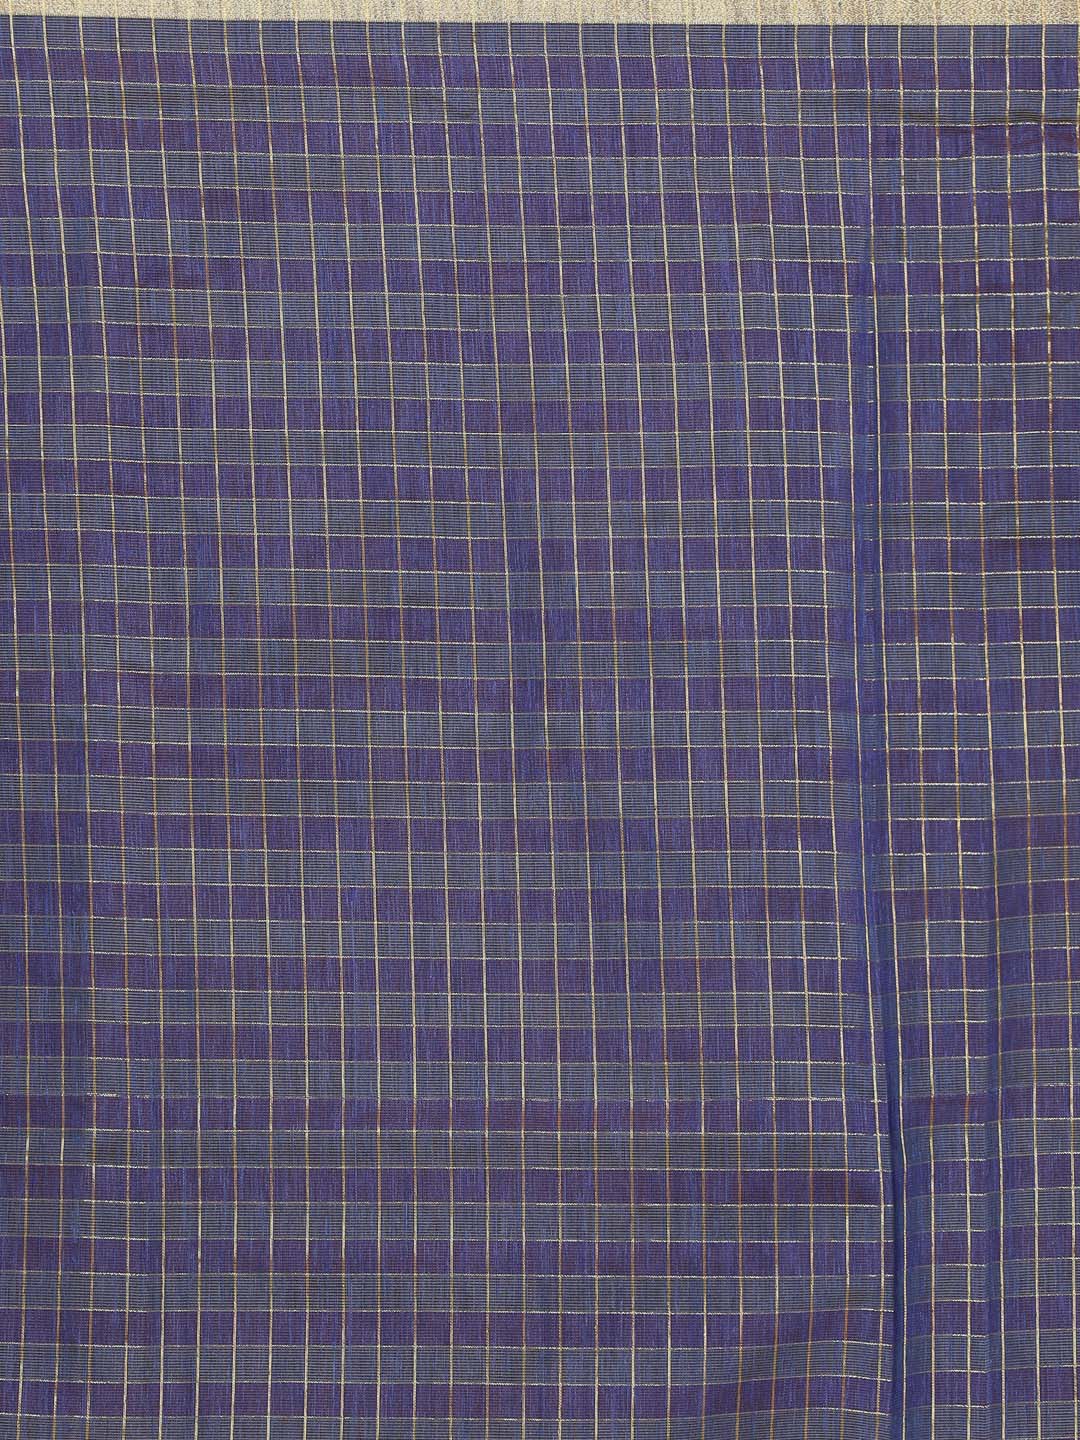 Indethnic Banarasi Purple Checked Daily Wear Saree - Saree Detail View